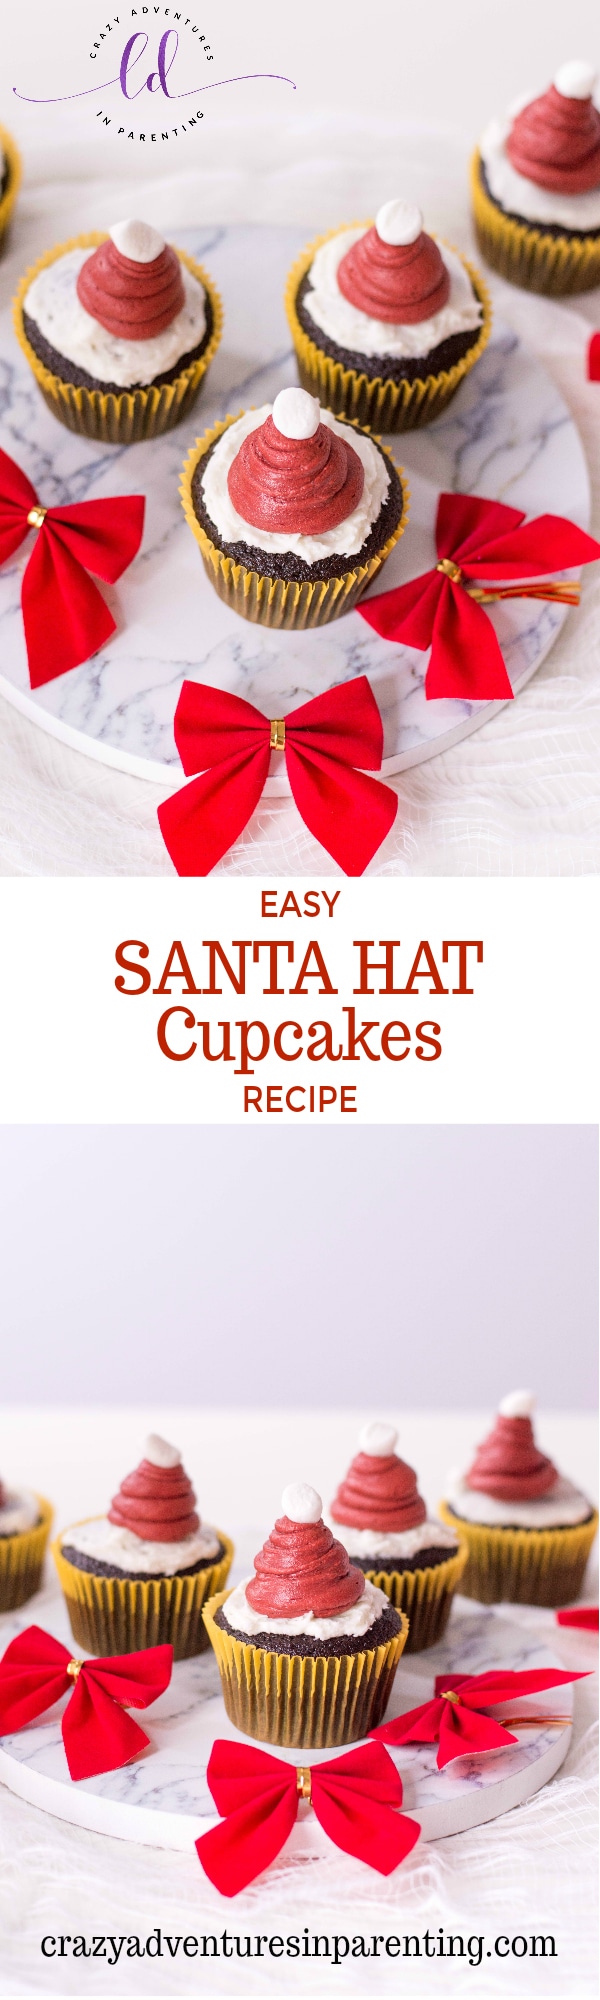 Easy Santa Hat Cupcakes Recipe